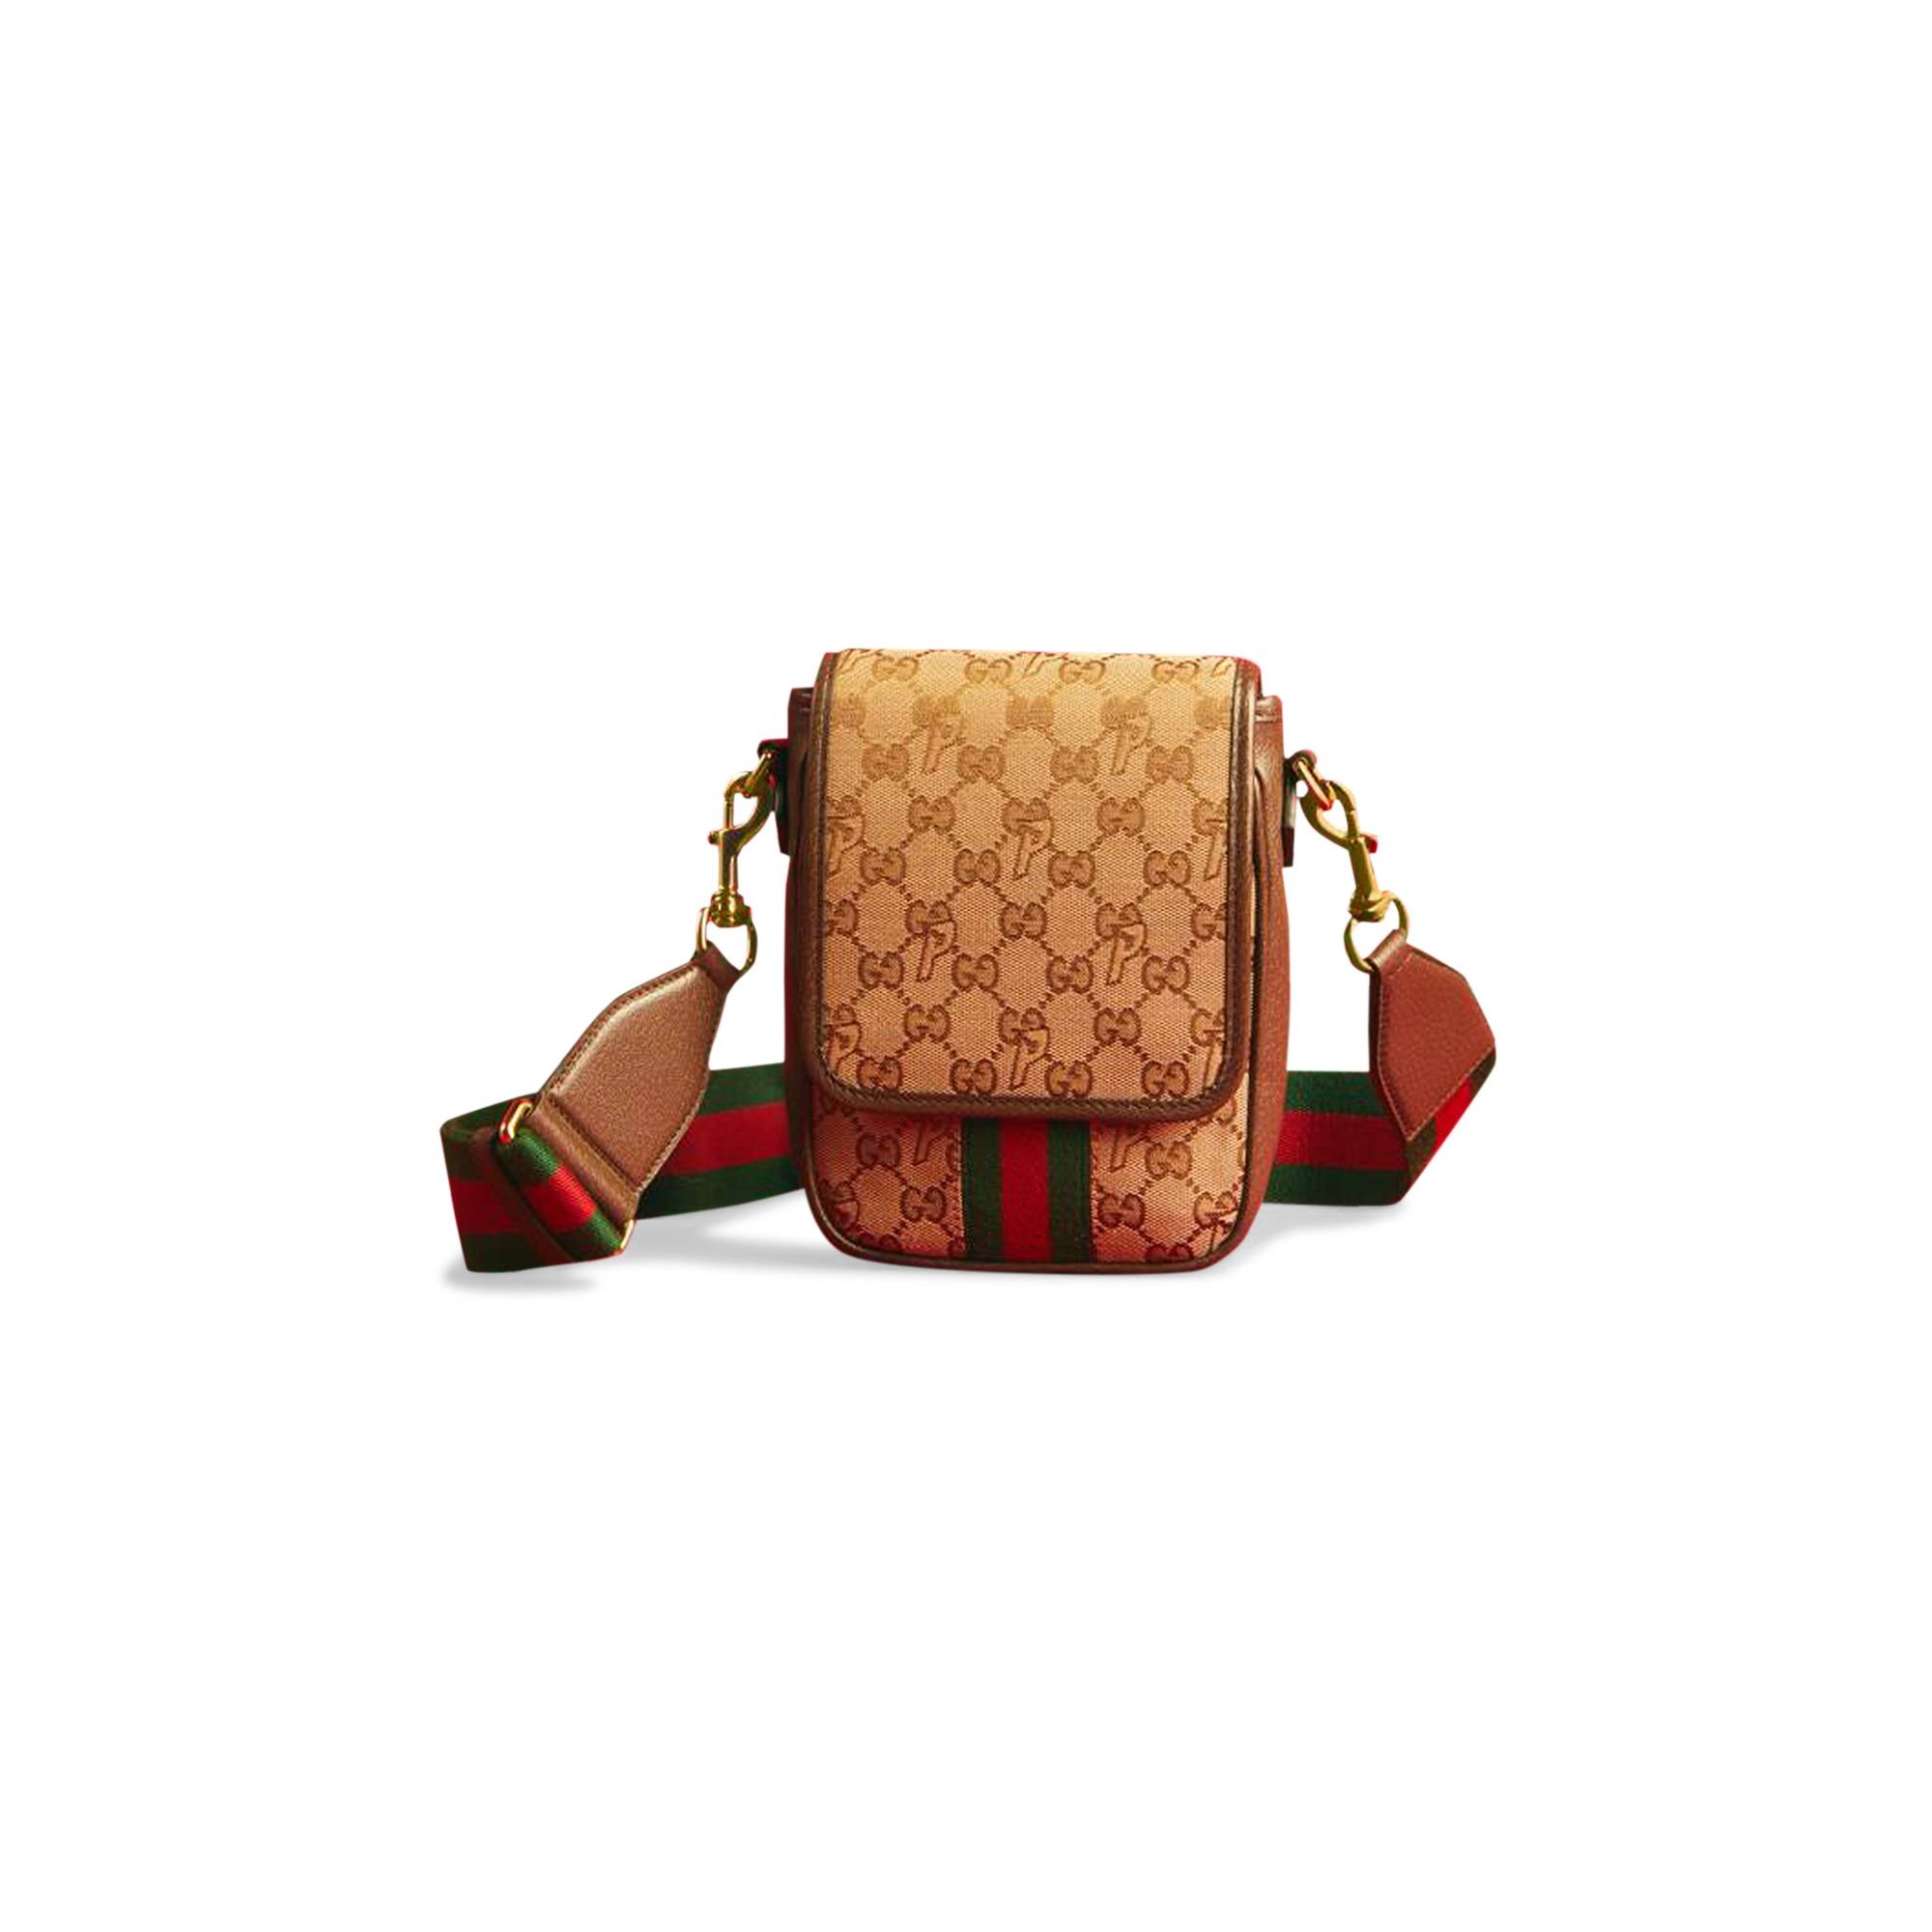 Gucci x Palace GG-P Canvas Messenger Bag With Web Shoulder Strap 'Beige' - 1